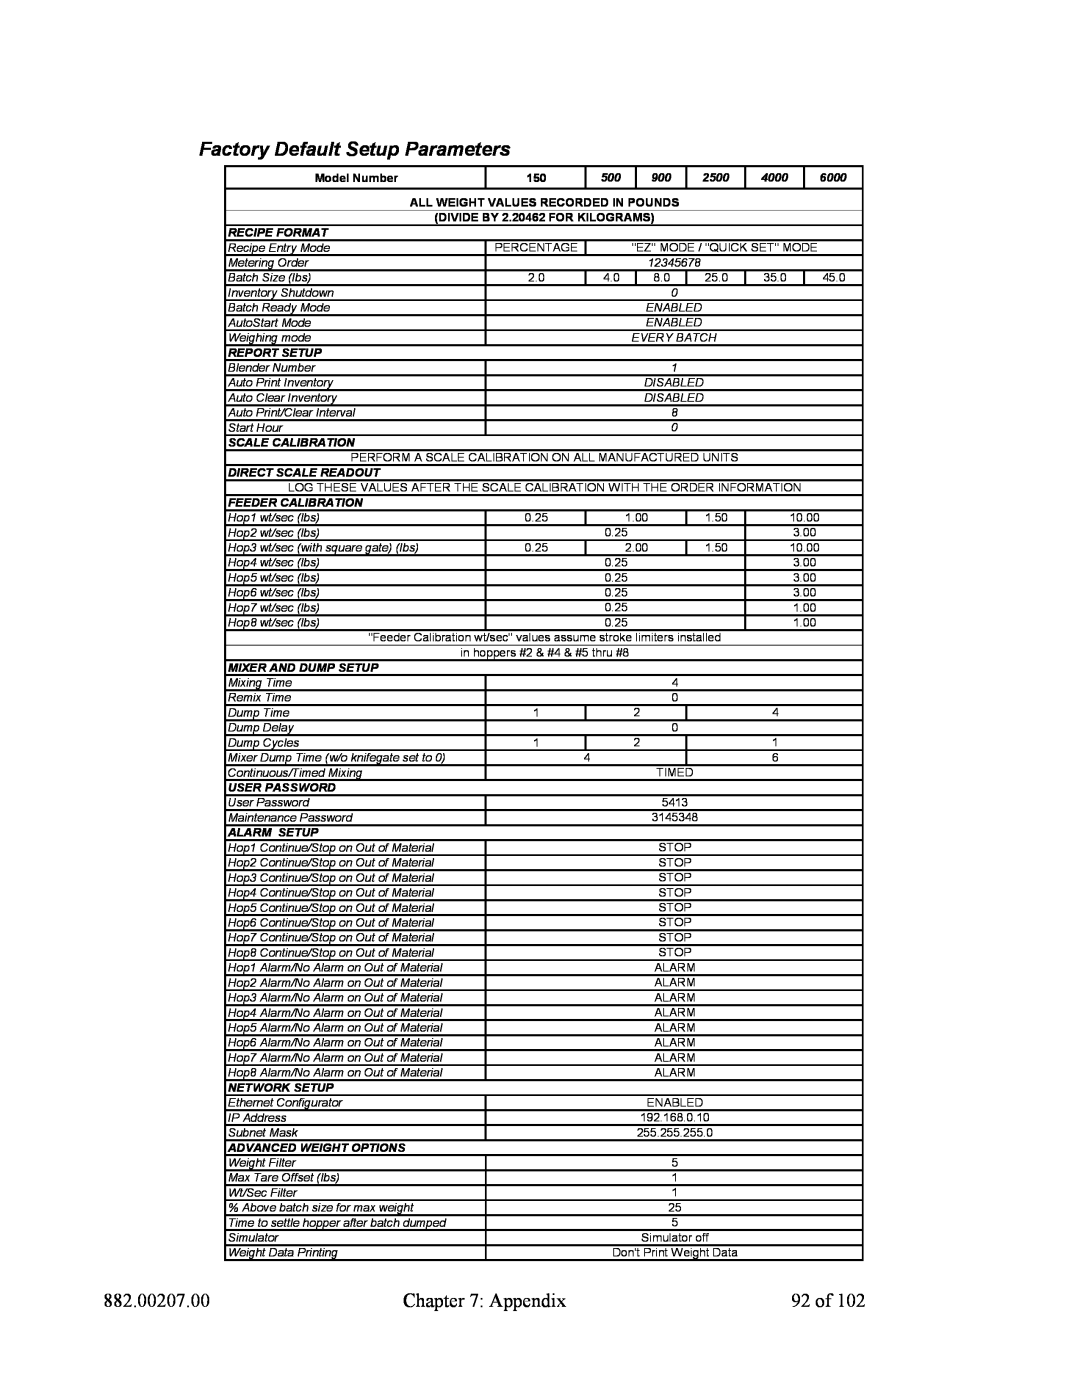 Mitsubishi Electronics 882.00207.00 specifications Factory Default Setup Parameters, Appendix, 92 of 